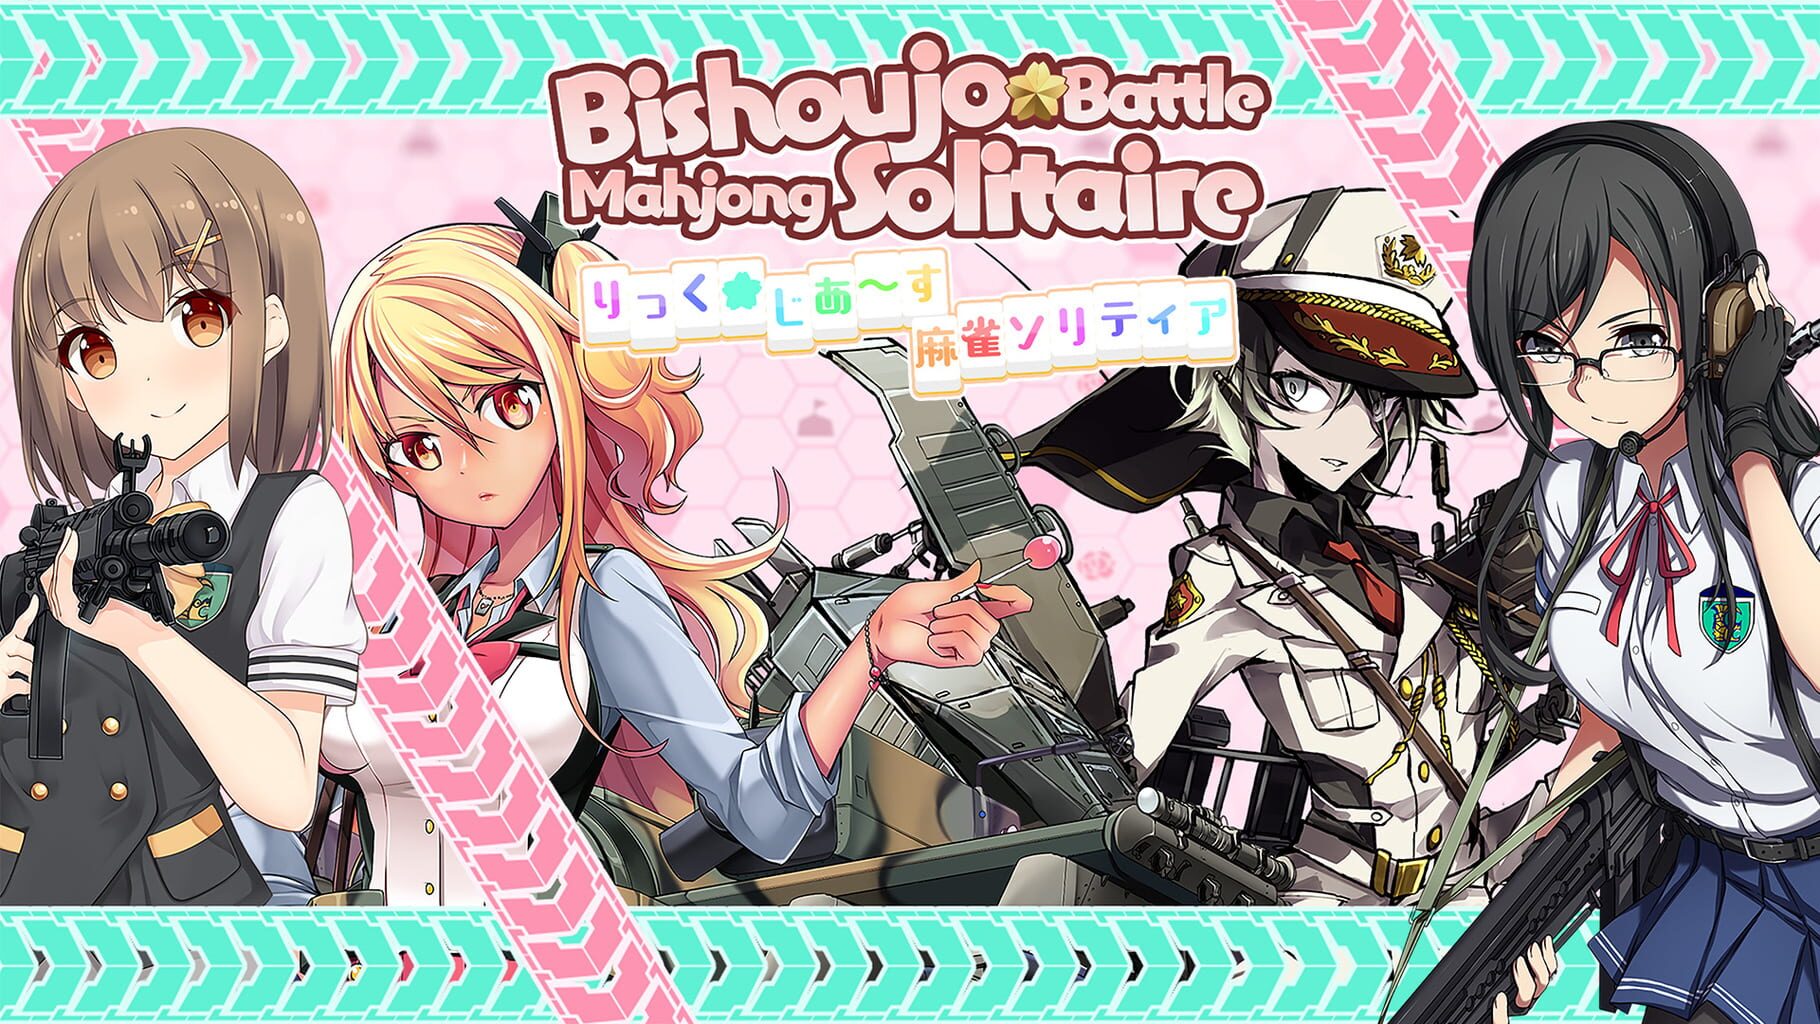 Bishoujo Battle Mahjong Solitaire artwork